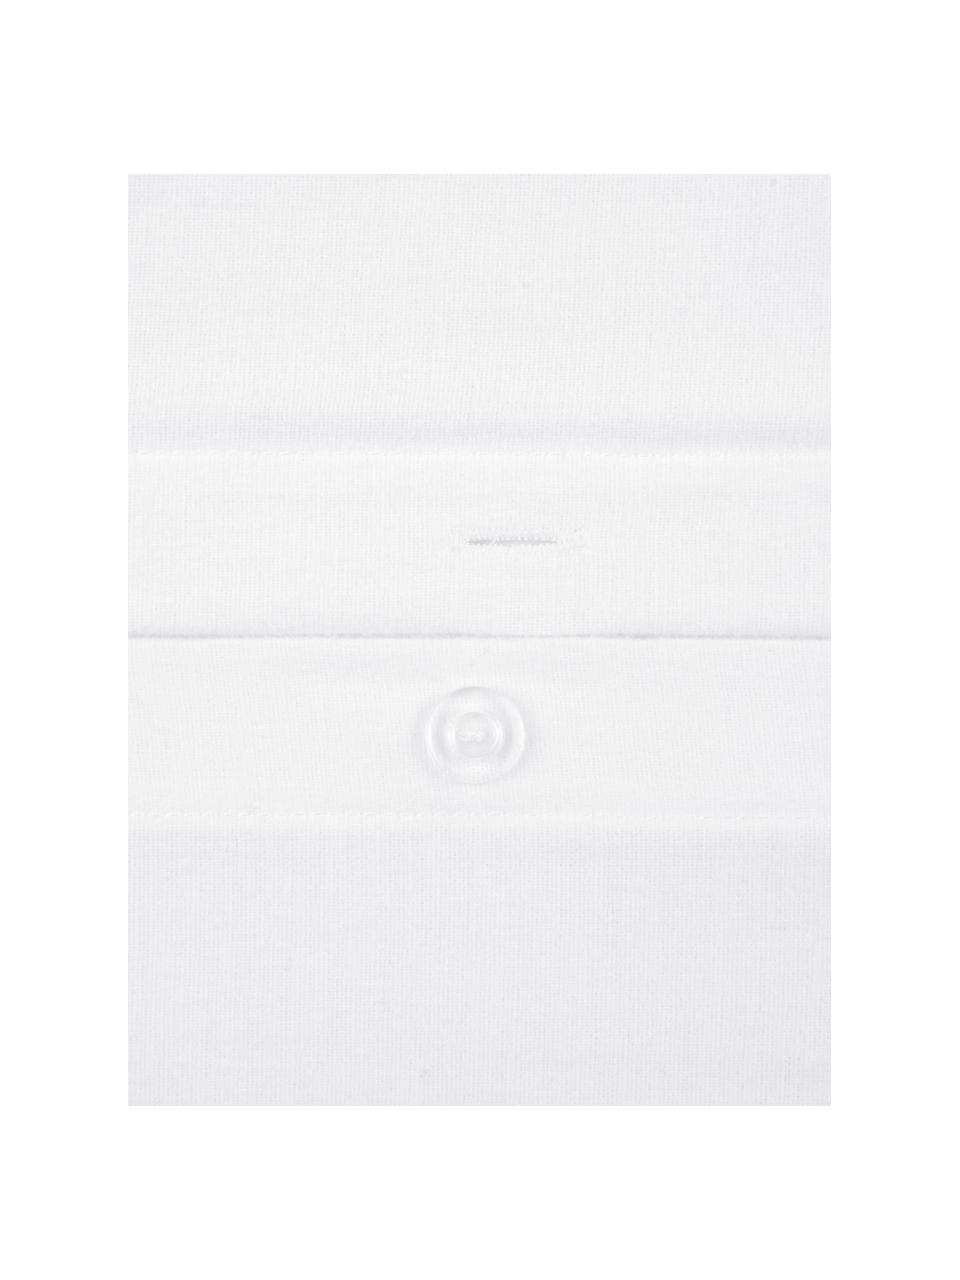 Flanell-Kissenbezüge Erica in Weiss, 2 Stück, Webart: Flanell Flanell ist ein k, Weiss, 40 x 80 cm